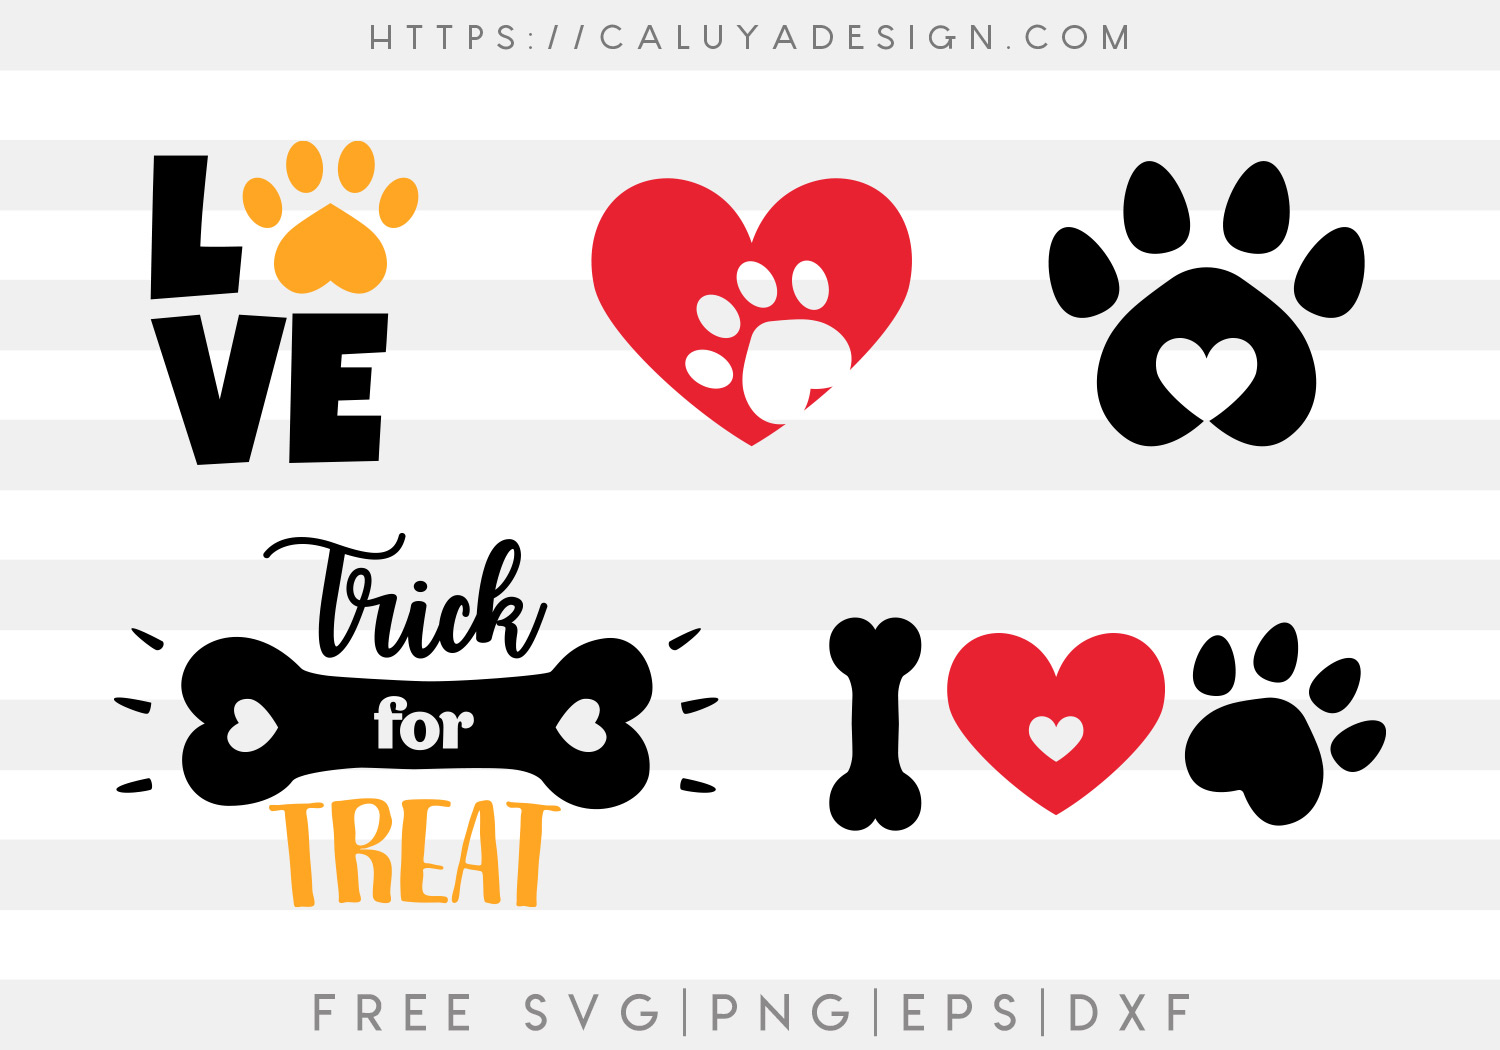 Free Dog Lovers Bundle SVG, PNG, EPS & DXF by Caluya Design